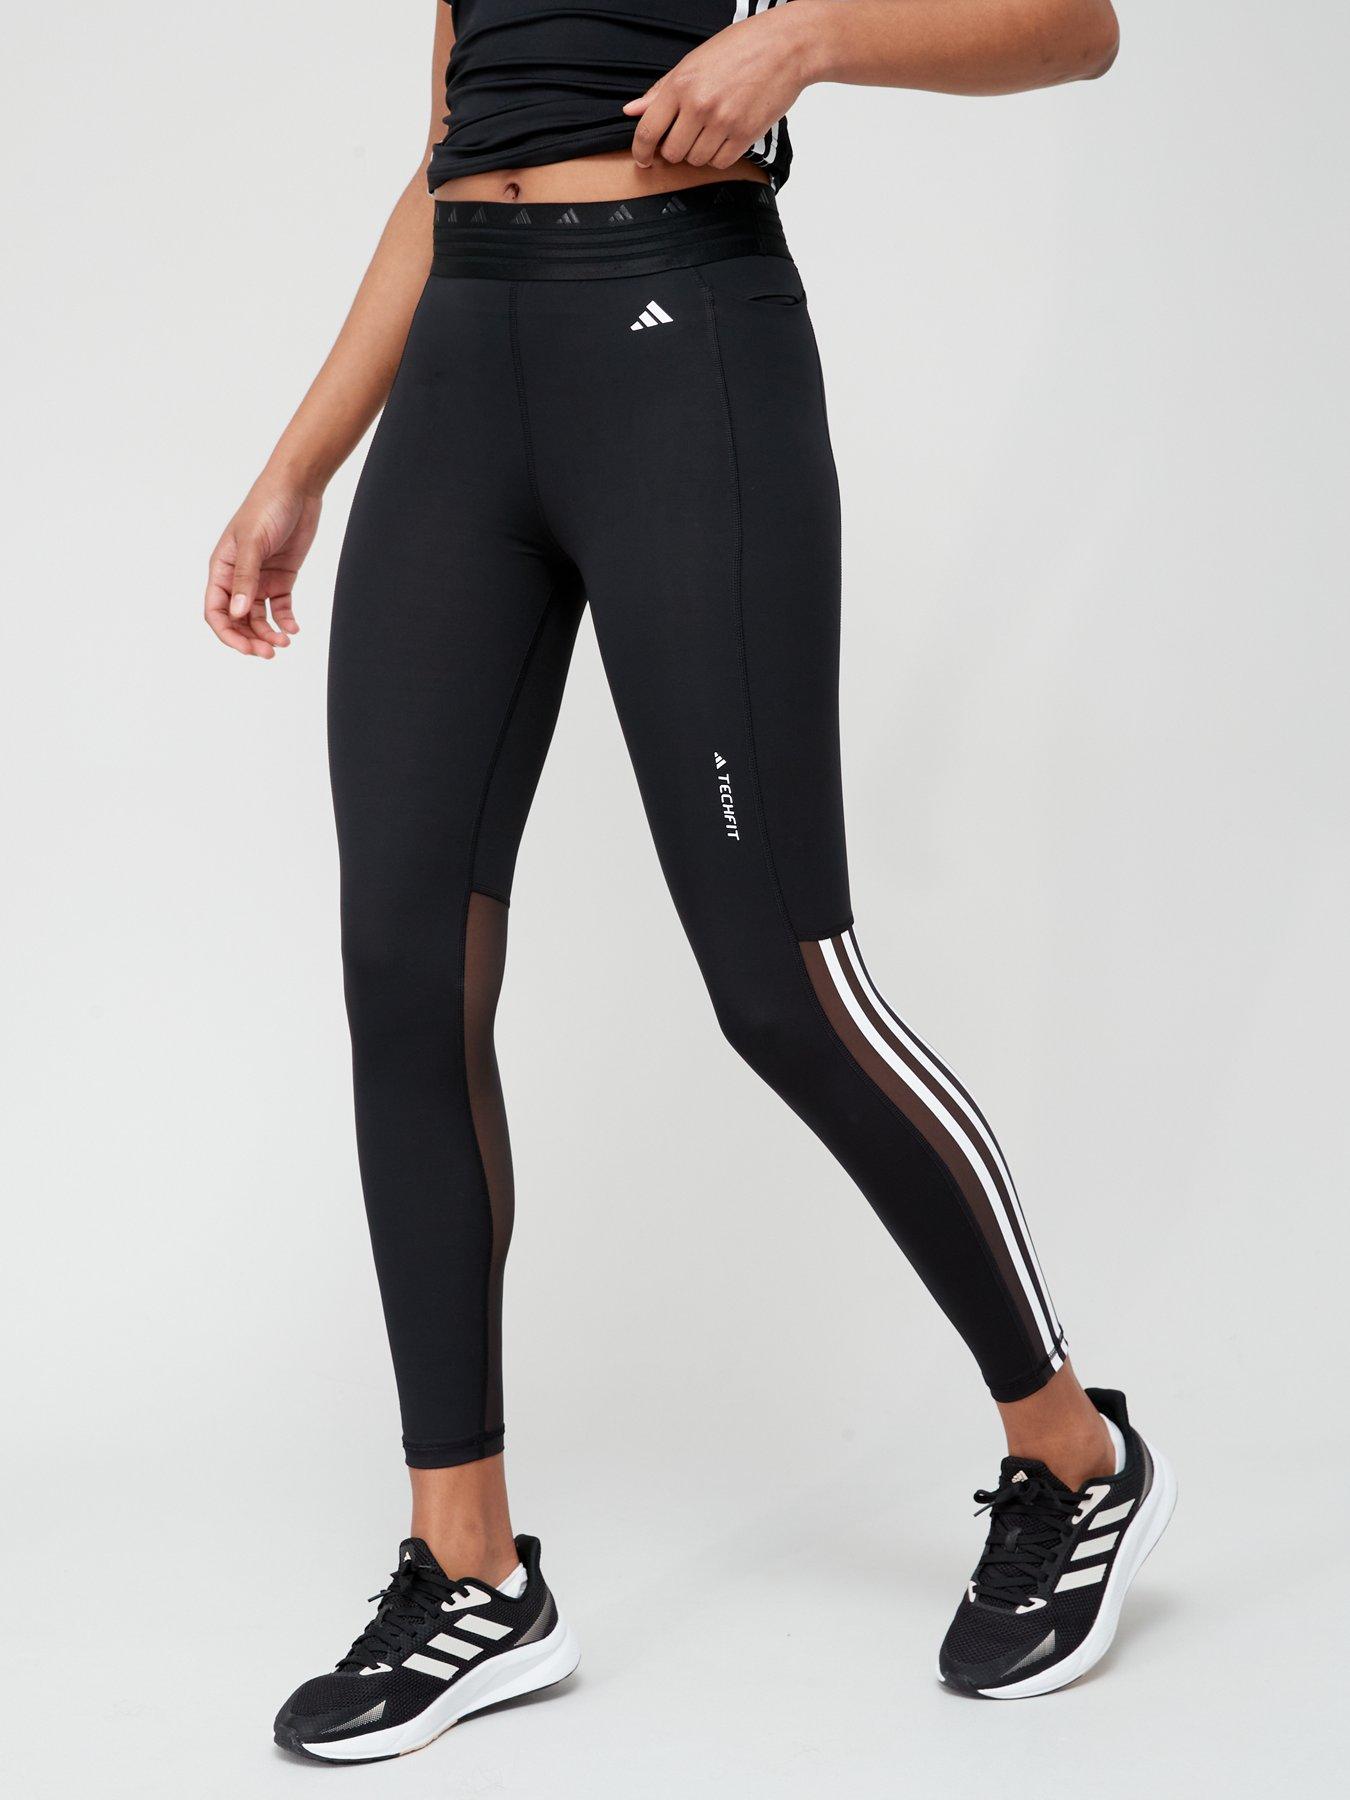 adidas Women's Alphaskin Sport Capri Tights, Black/White, Small at   Women's Clothing store